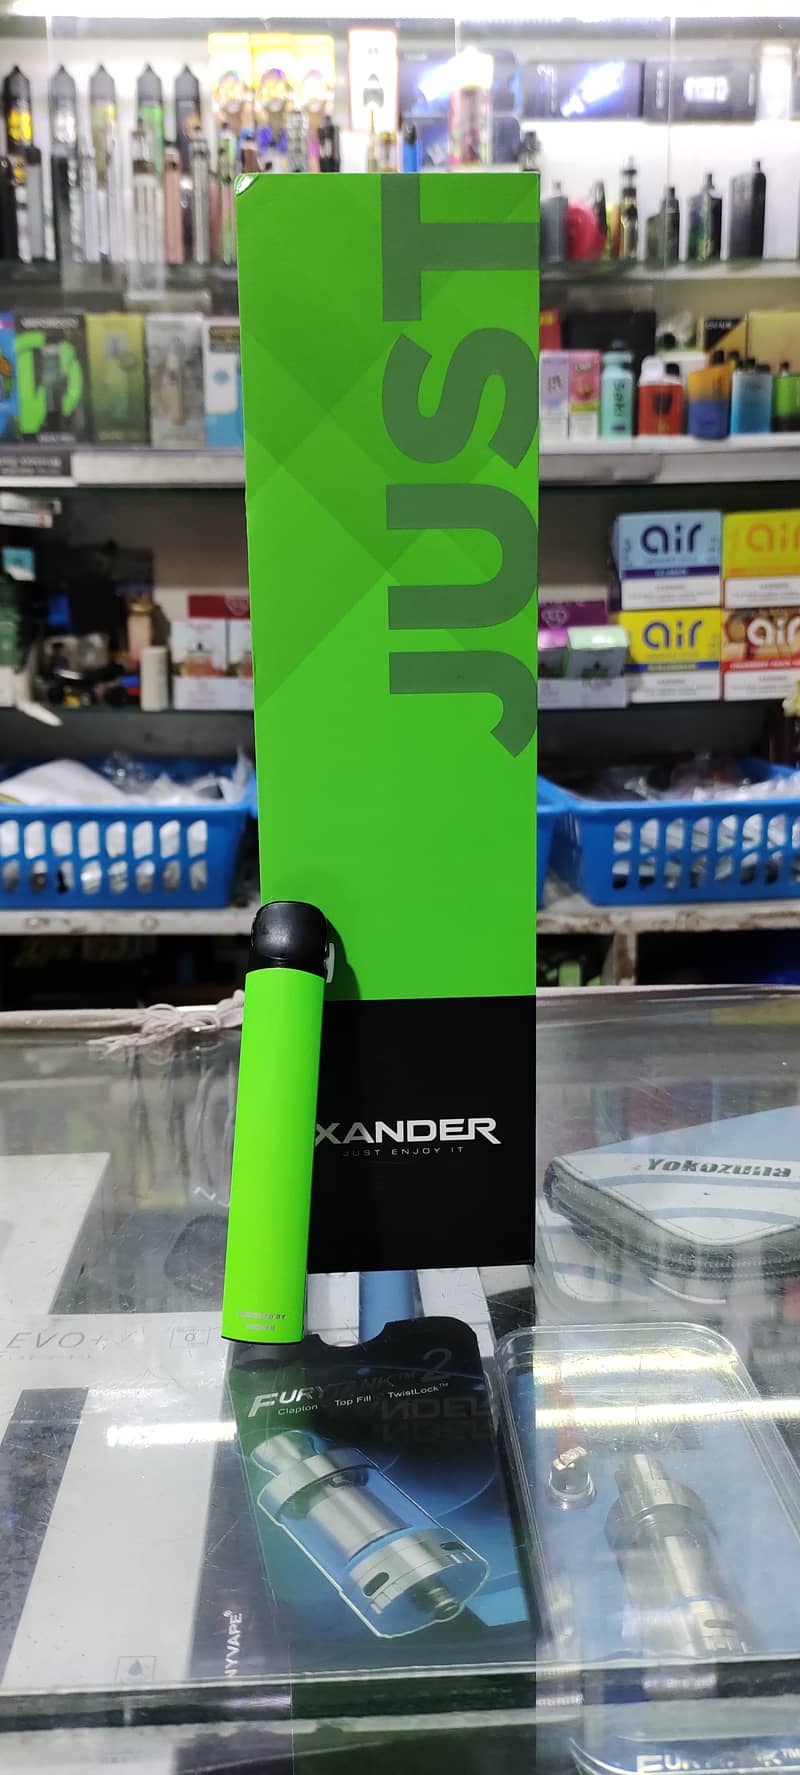 Xander Pod Rechargeable, 2 Coils Different Colors 0